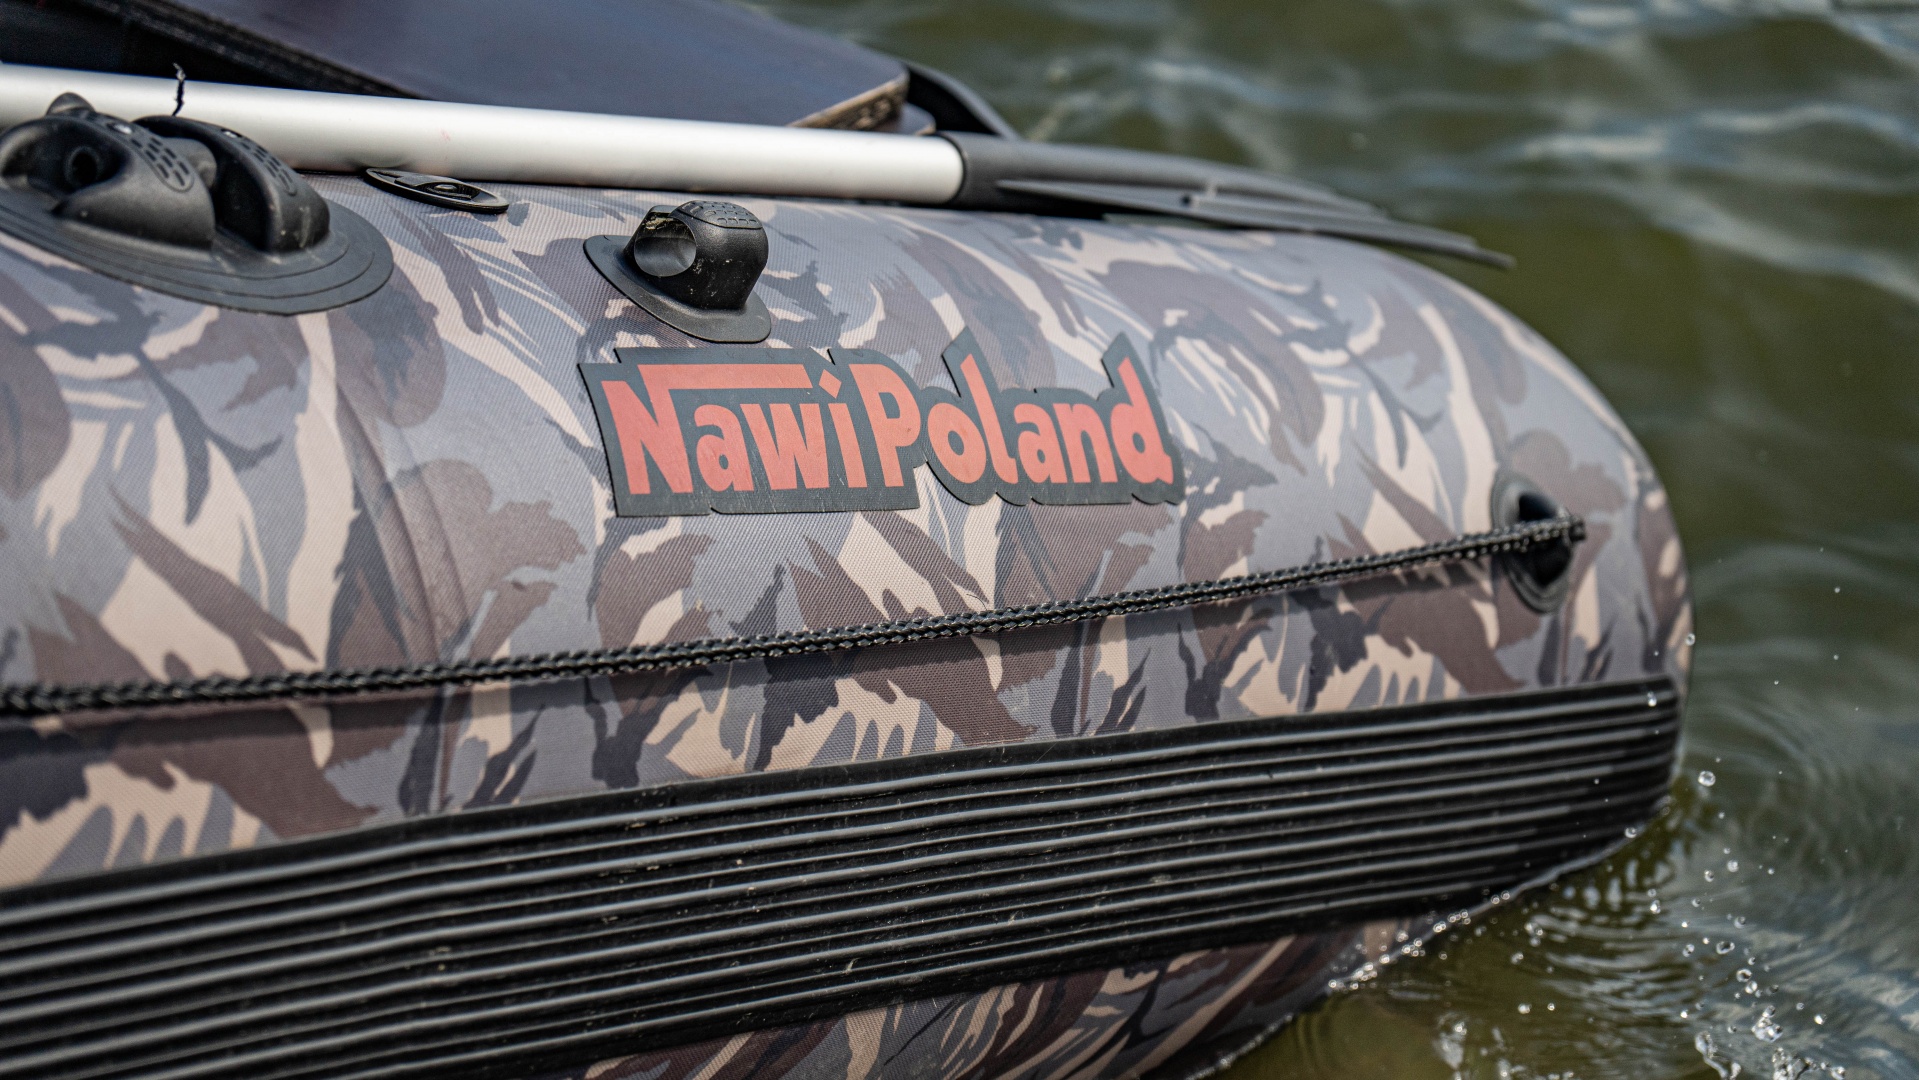 NawiPoland CAT 300 Inflatable Boat  - Catamarano